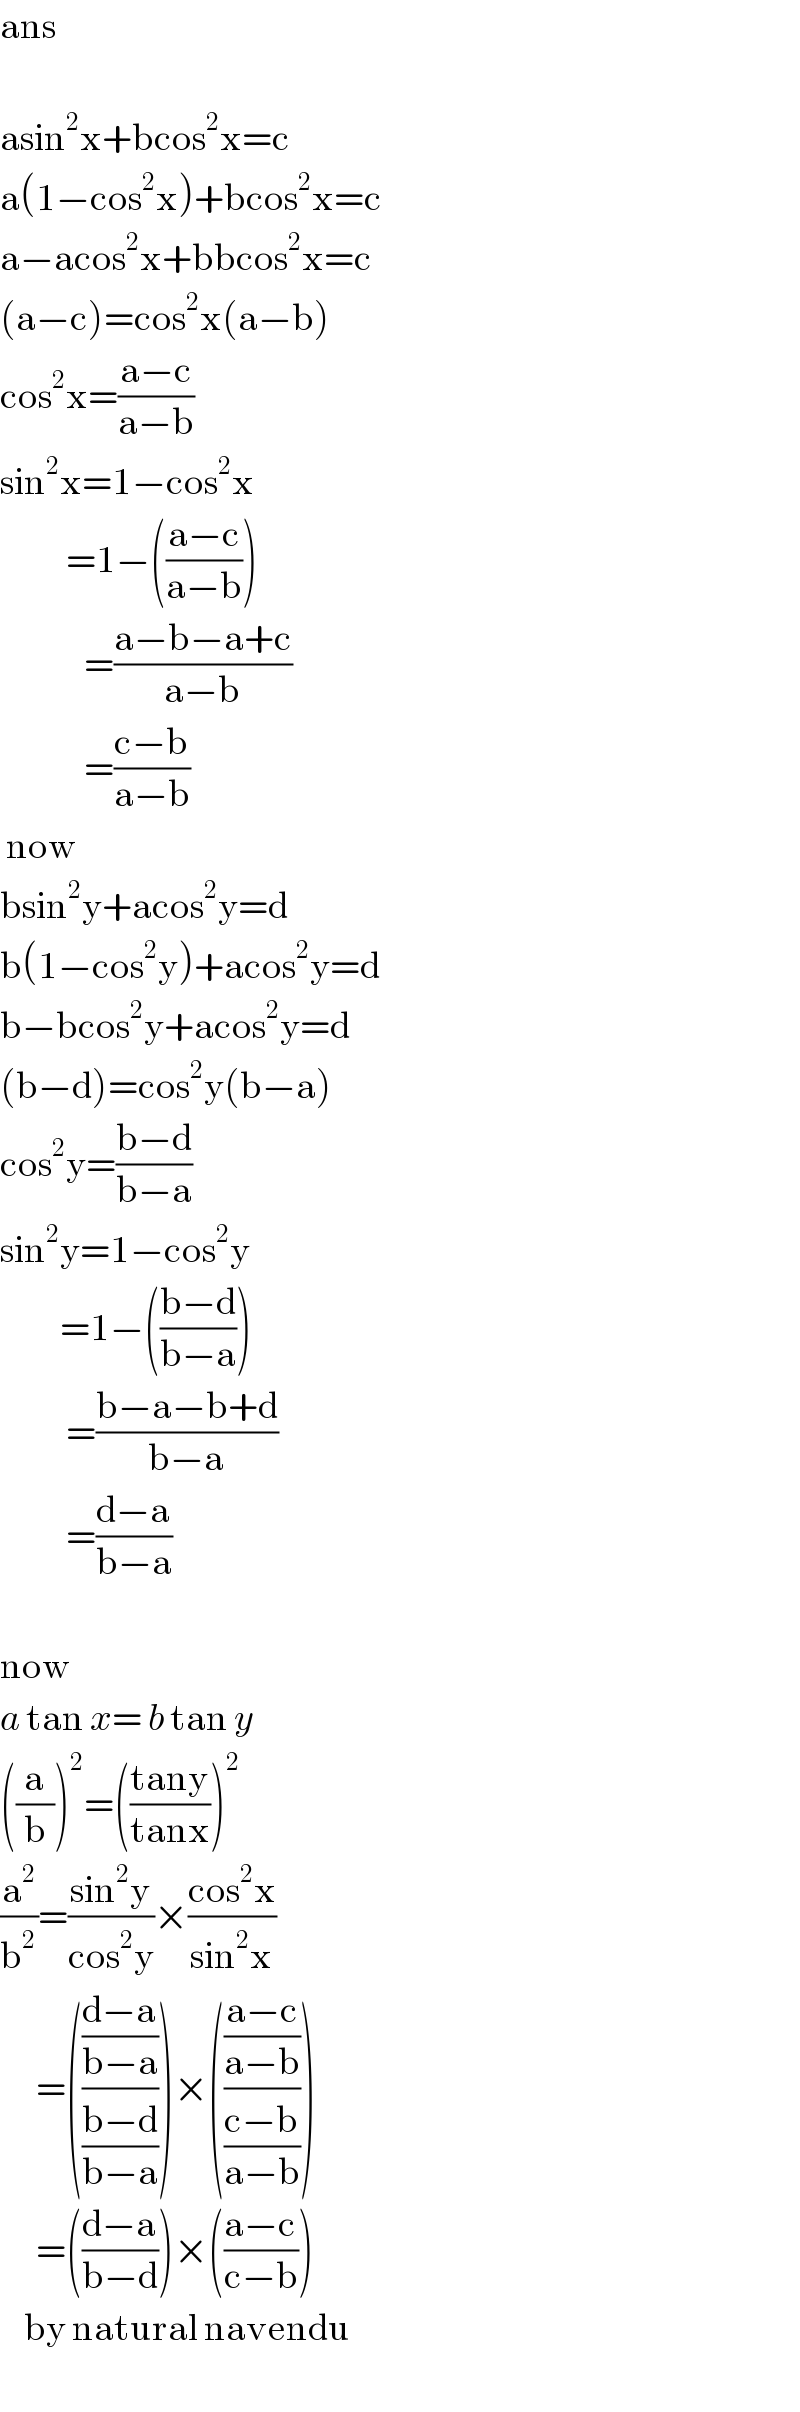 ans    asin^2 x+bcos^2 x=c  a(1−cos^2 x)+bcos^2 x=c  a−acos^2 x+bbcos^2 x=c  (a−c)=cos^2 x(a−b)  cos^2 x=((a−c)/(a−b))  sin^2 x=1−cos^2 x             =1−(((a−c)/(a−b)))                =((a−b−a+c)/(a−b))                =((c−b)/(a−b))   now  bsin^2 y+acos^2 y=d  b(1−cos^2 y)+acos^2 y=d  b−bcos^2 y+acos^2 y=d  (b−d)=cos^2 y(b−a)  cos^2 y=((b−d)/(b−a))  sin^2 y=1−cos^2 y            =1−(((b−d)/(b−a)))             =((b−a−b+d)/(b−a))             =((d−a)/(b−a))    now  a tan x= b tan y   ((a/b))^2 =(((tany)/(tanx)))^2   (a^2 /b^2 )=((sin^2 y)/(cos^2 y))×((cos^2 x)/(sin^2 x))        =((((d−a)/(b−a))/((b−d)/(b−a))))×((((a−c)/(a−b))/((c−b)/(a−b))))        =(((d−a)/(b−d)))×(((a−c)/(c−b)))      by natural navendu  